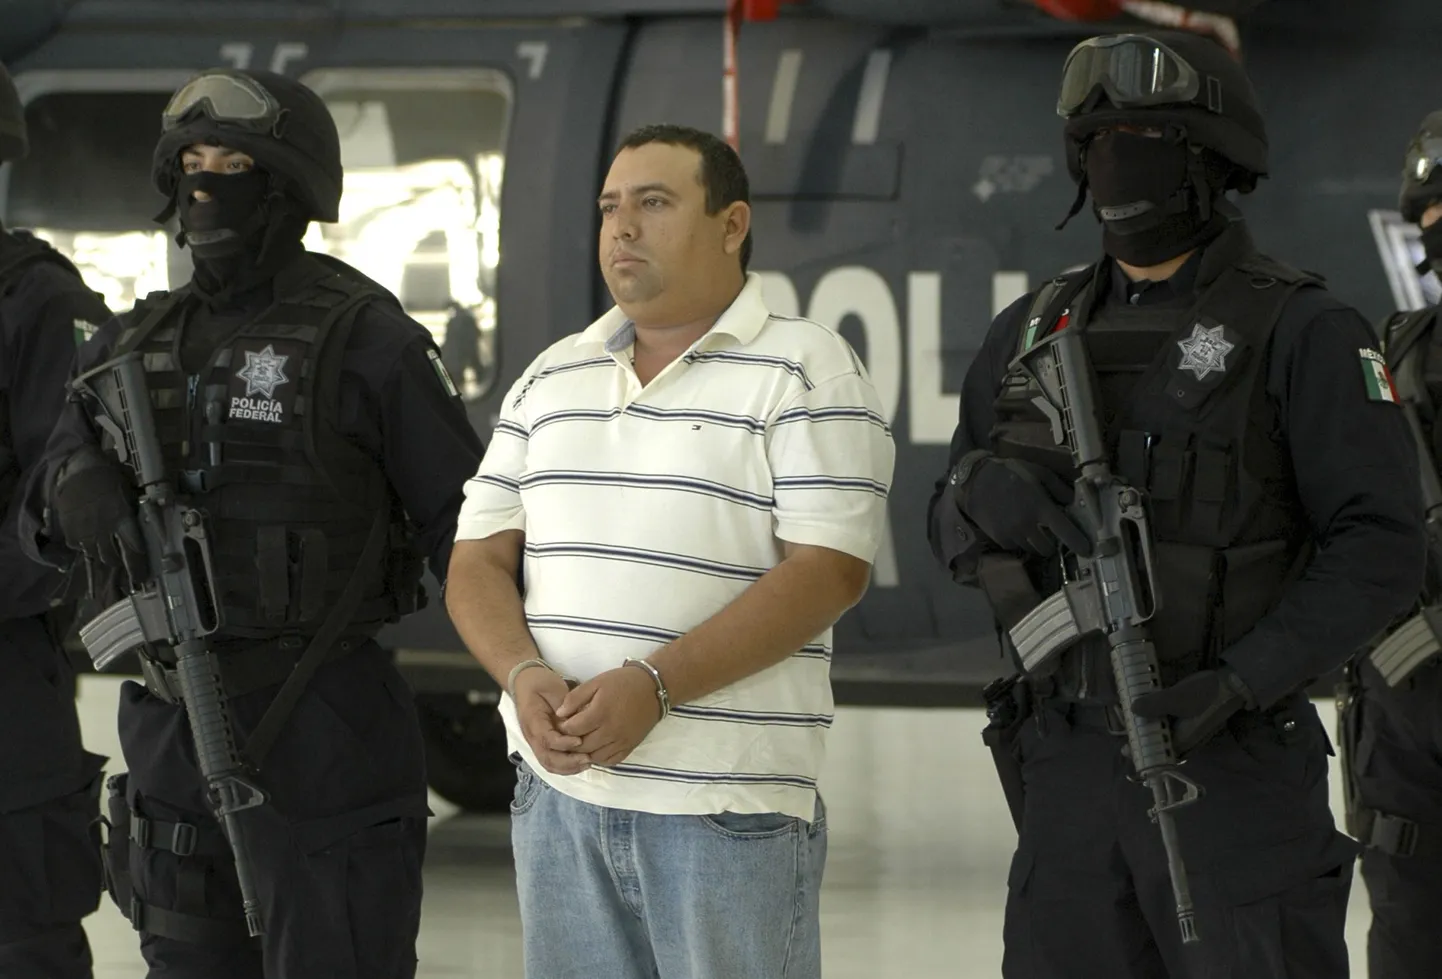 Mehhiko narkokuningas Jose Antonio Medina Arreguin ehk Don Pepe (keskel) koos politseinikega.